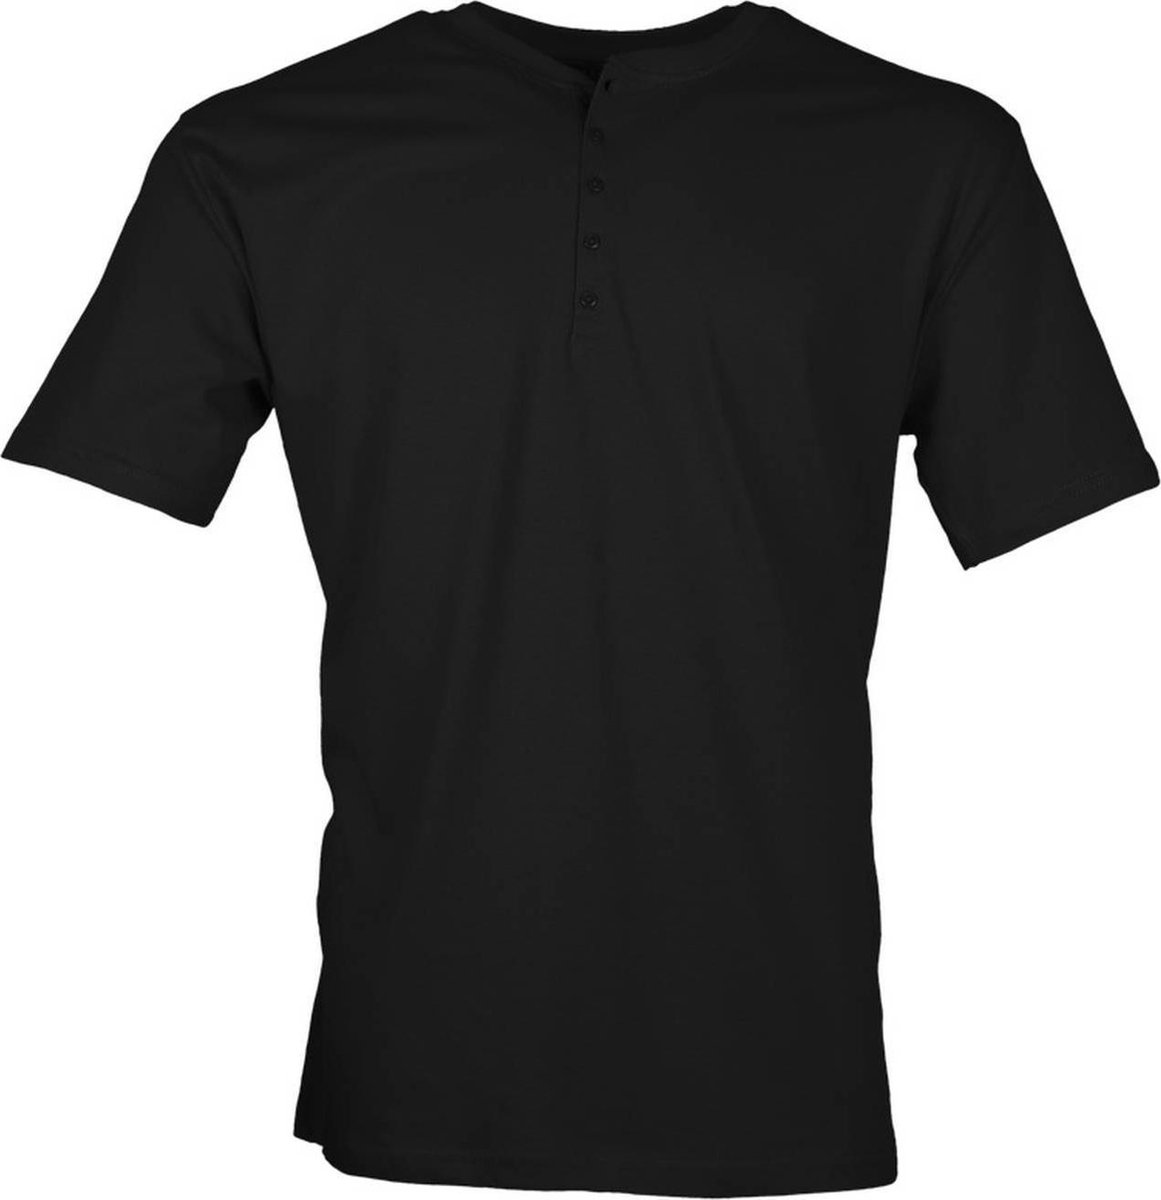 Losan Basic - Heren T-Shirt - Korte Mouw - Ronde Hals - Knoopjes - Zwart - Maat XXL